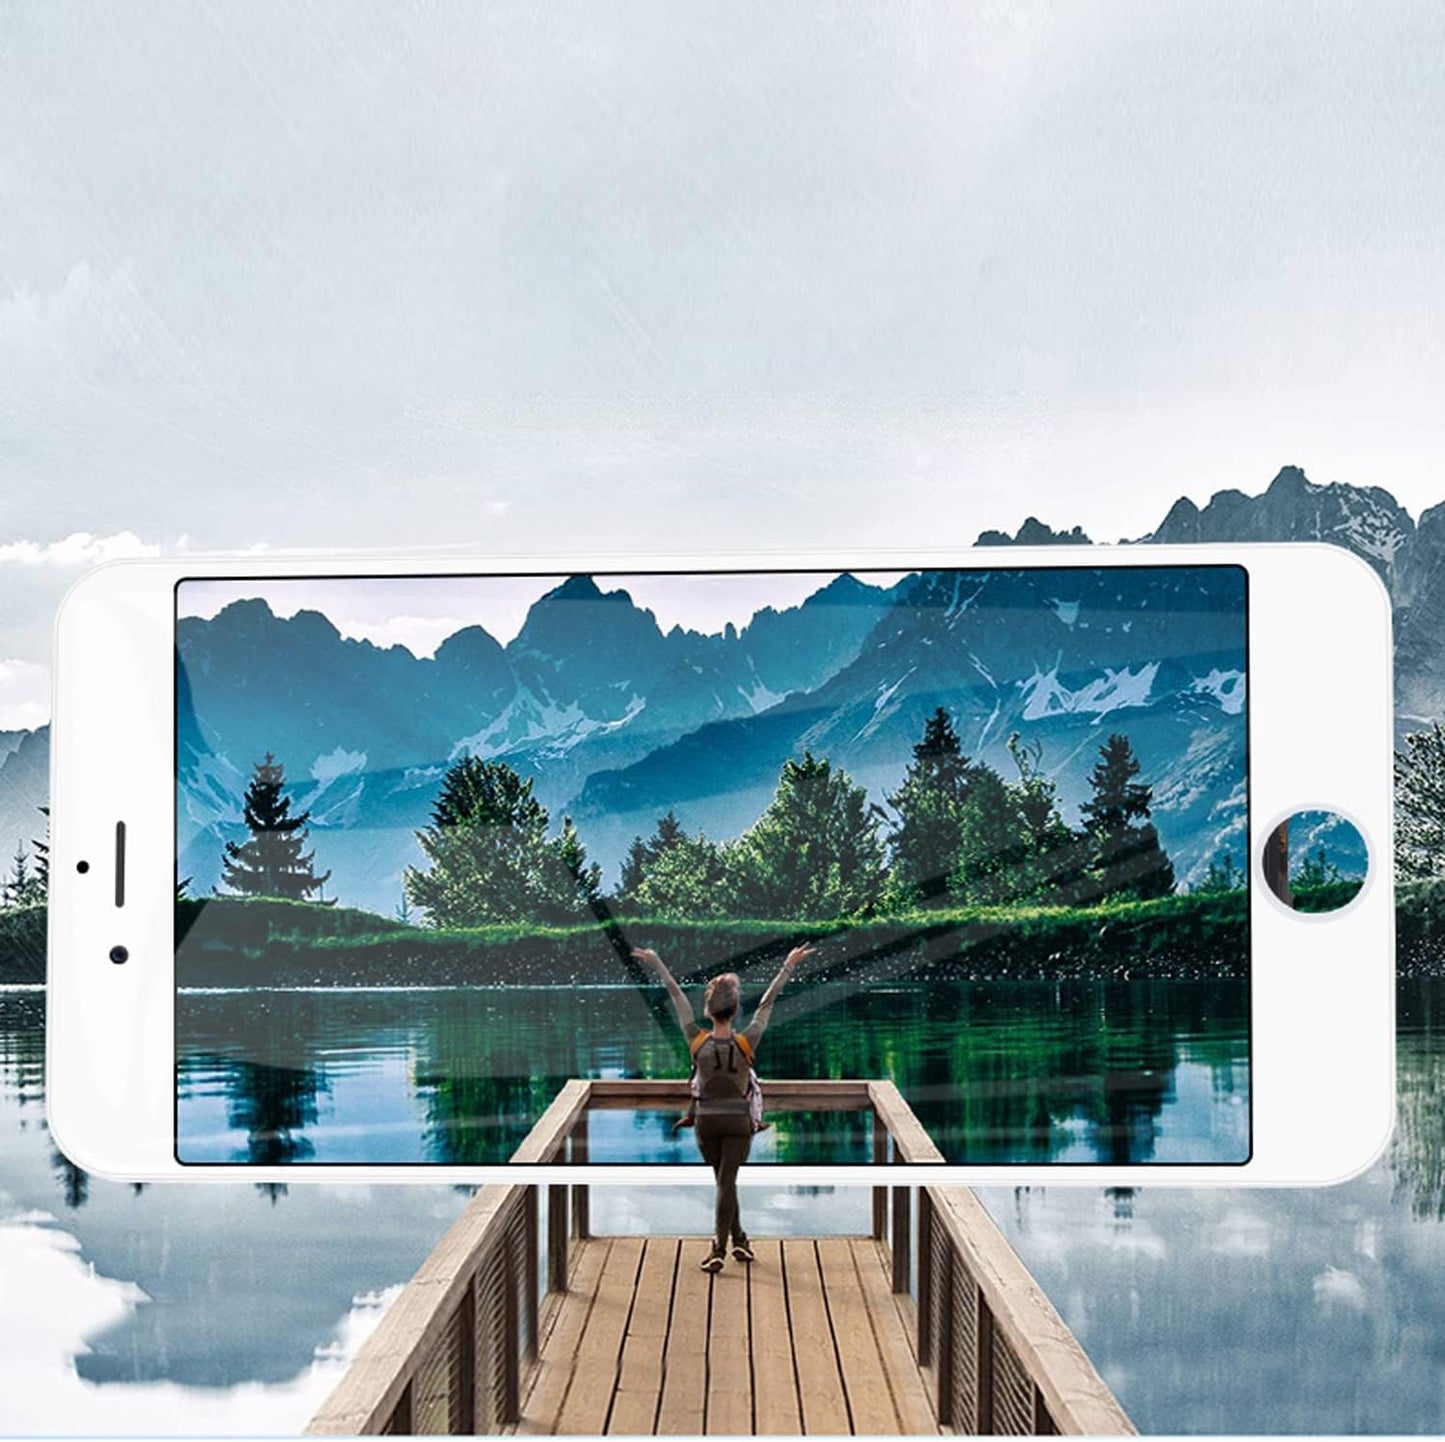 iPhone 6 Plus reemplazo de pantalla LCD de 5.5” - iPhone 6 Plus 5.5" LCD Screen Replacement